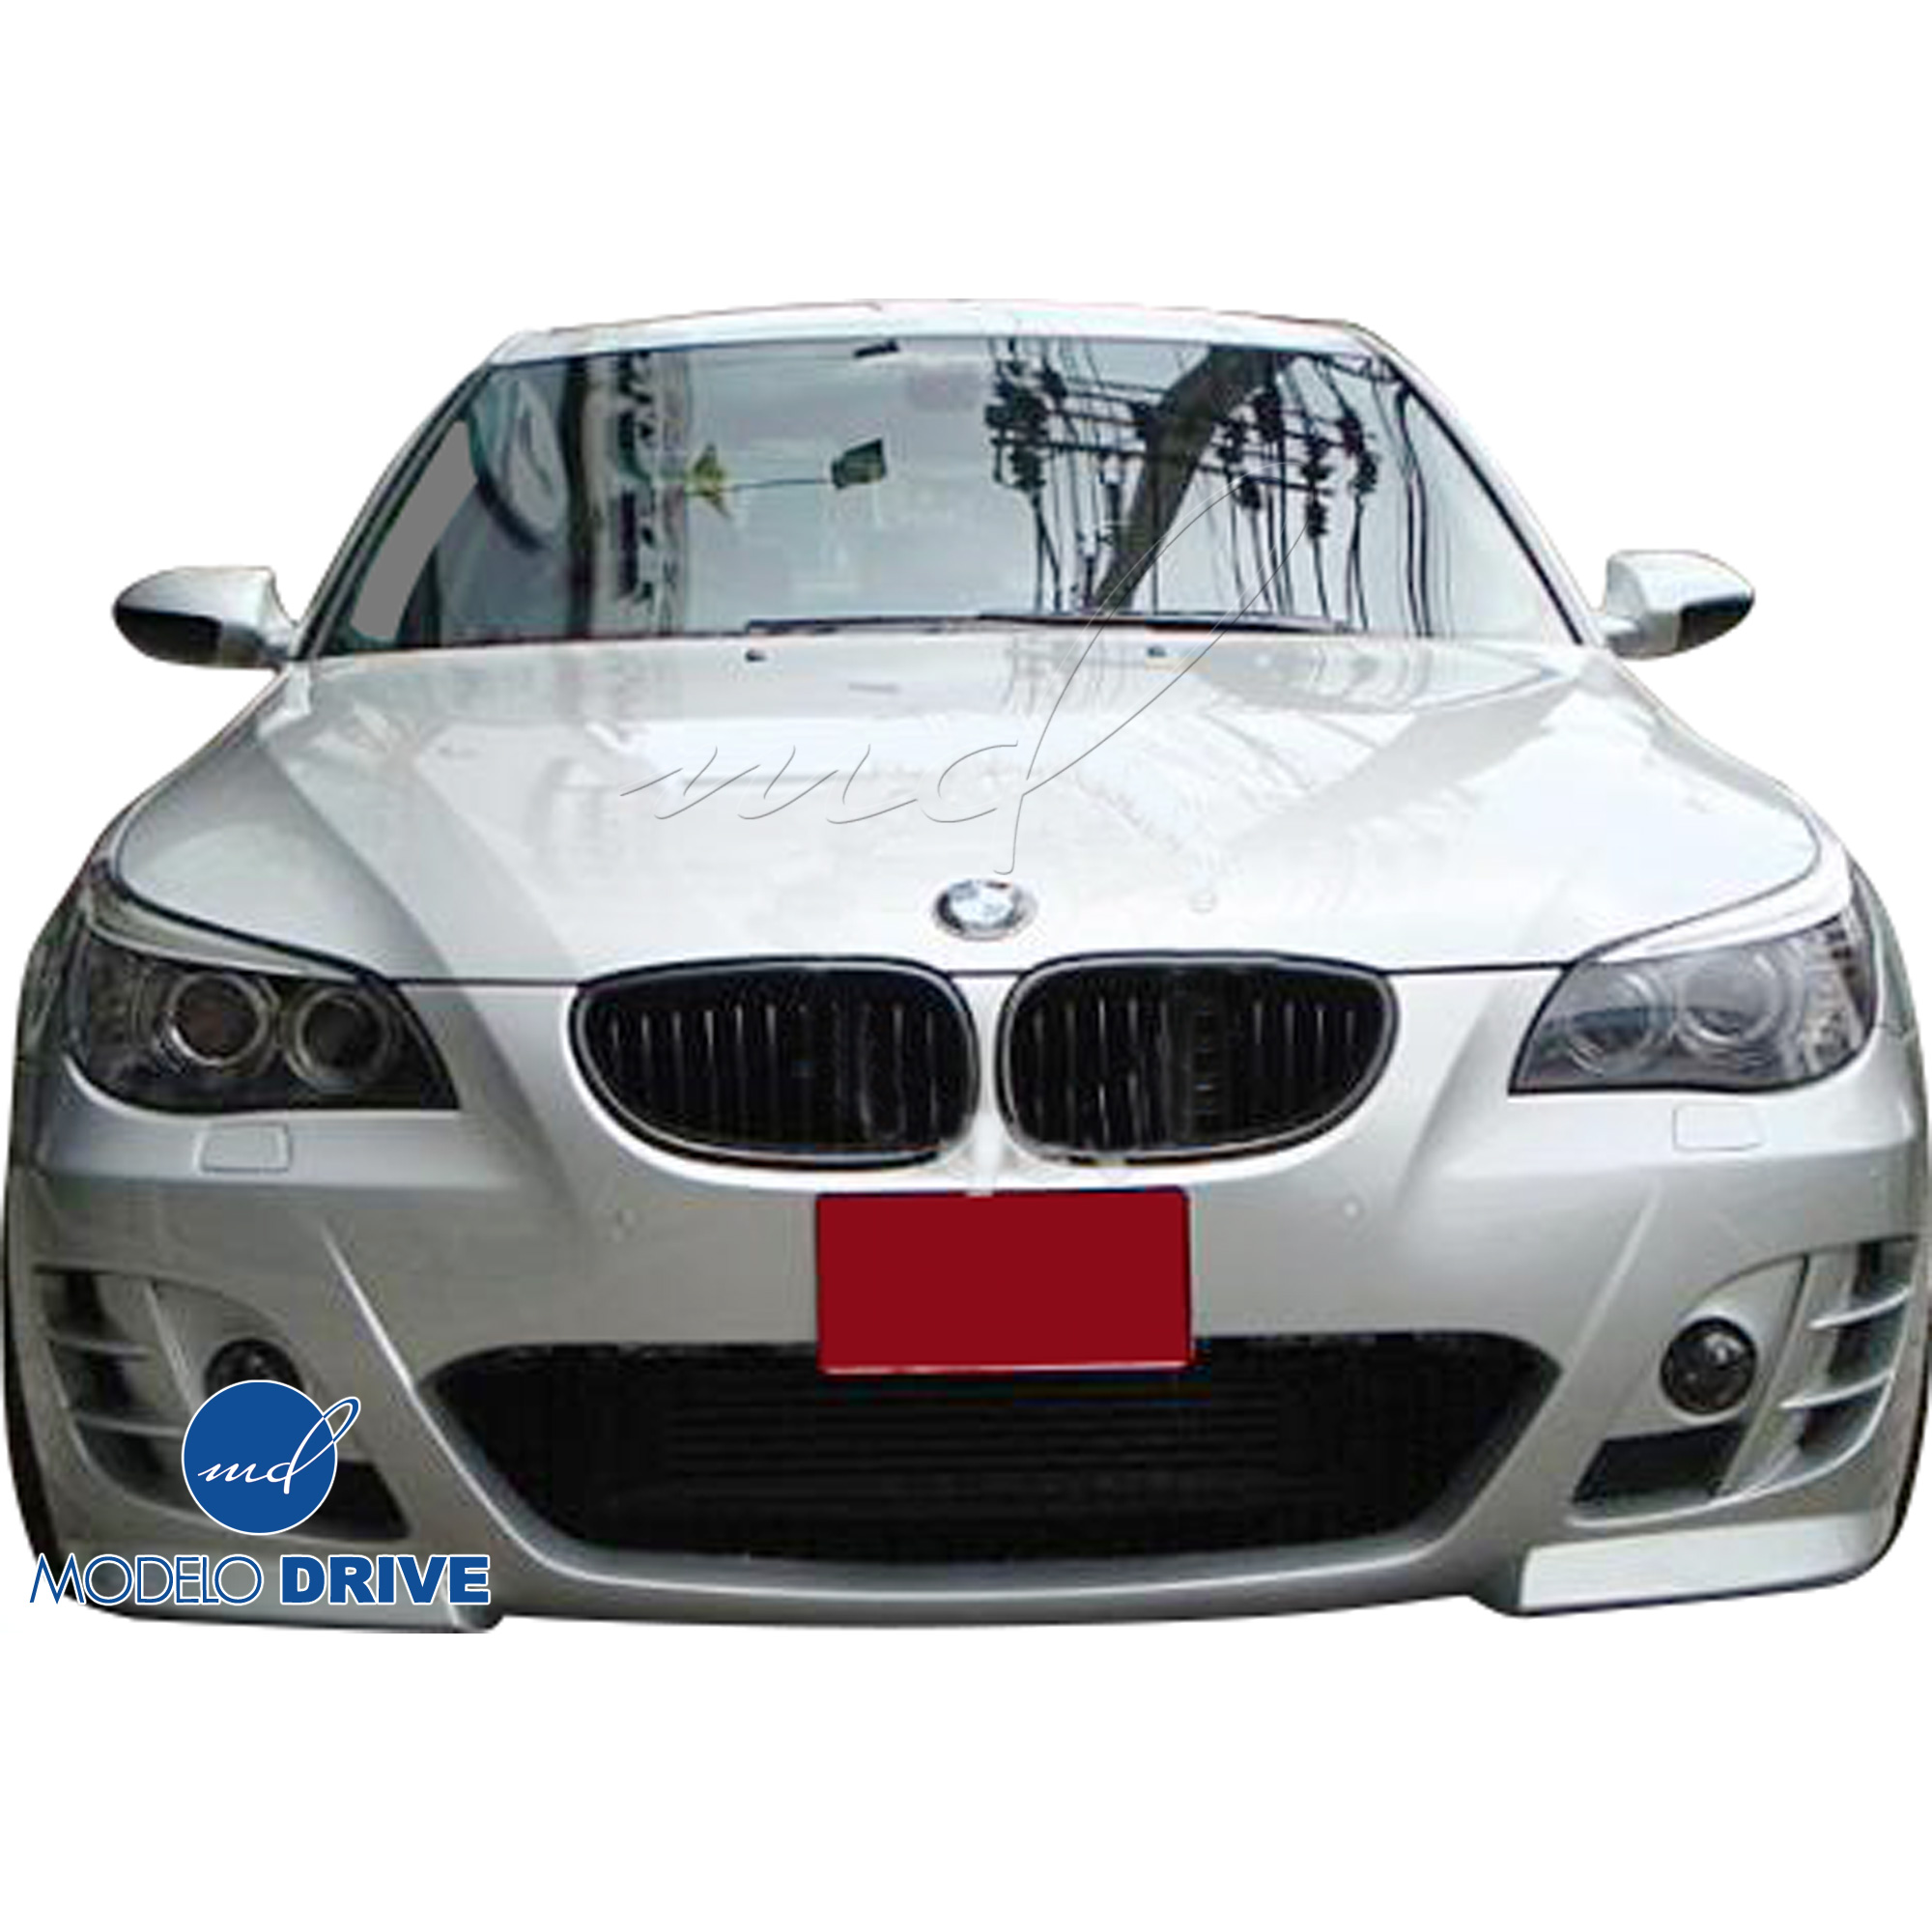 ModeloDrive FRP KERS Front Bumper > BMW 5-Series E60 2004-2010 > 4dr - Image 6